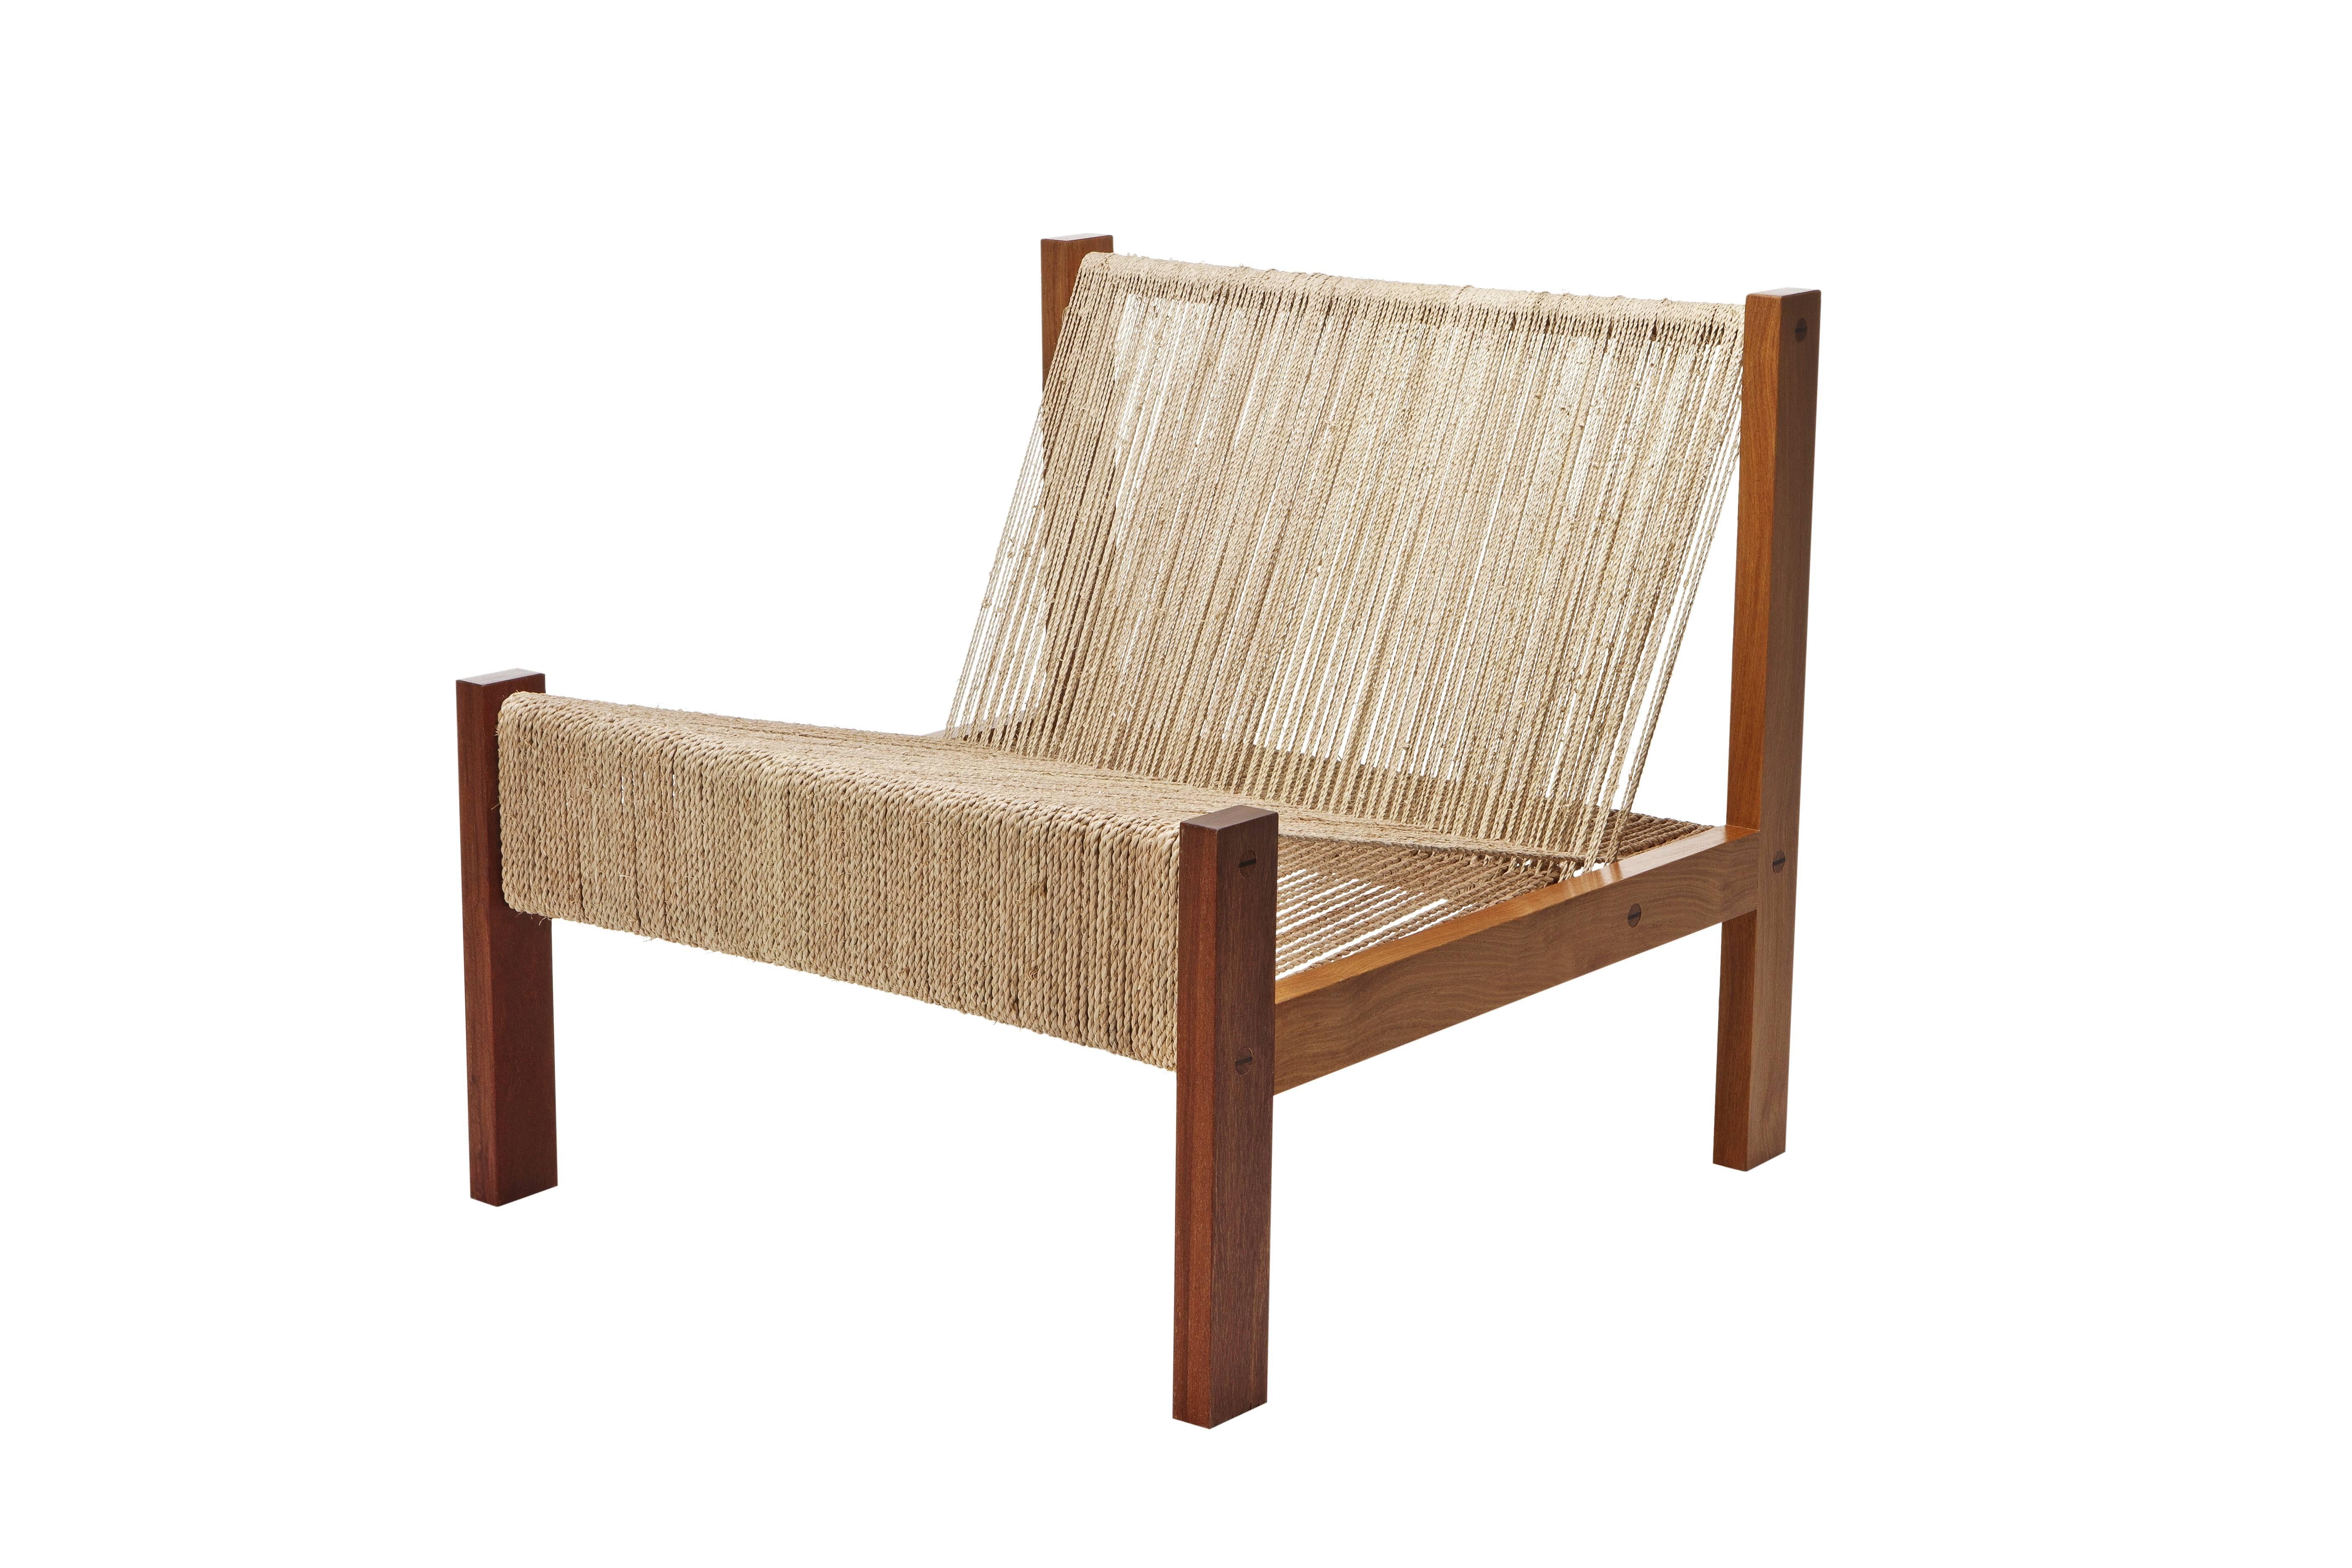 Minimalist Contemporary Lounge Chair and Ottoman in Brazilian Hardwood